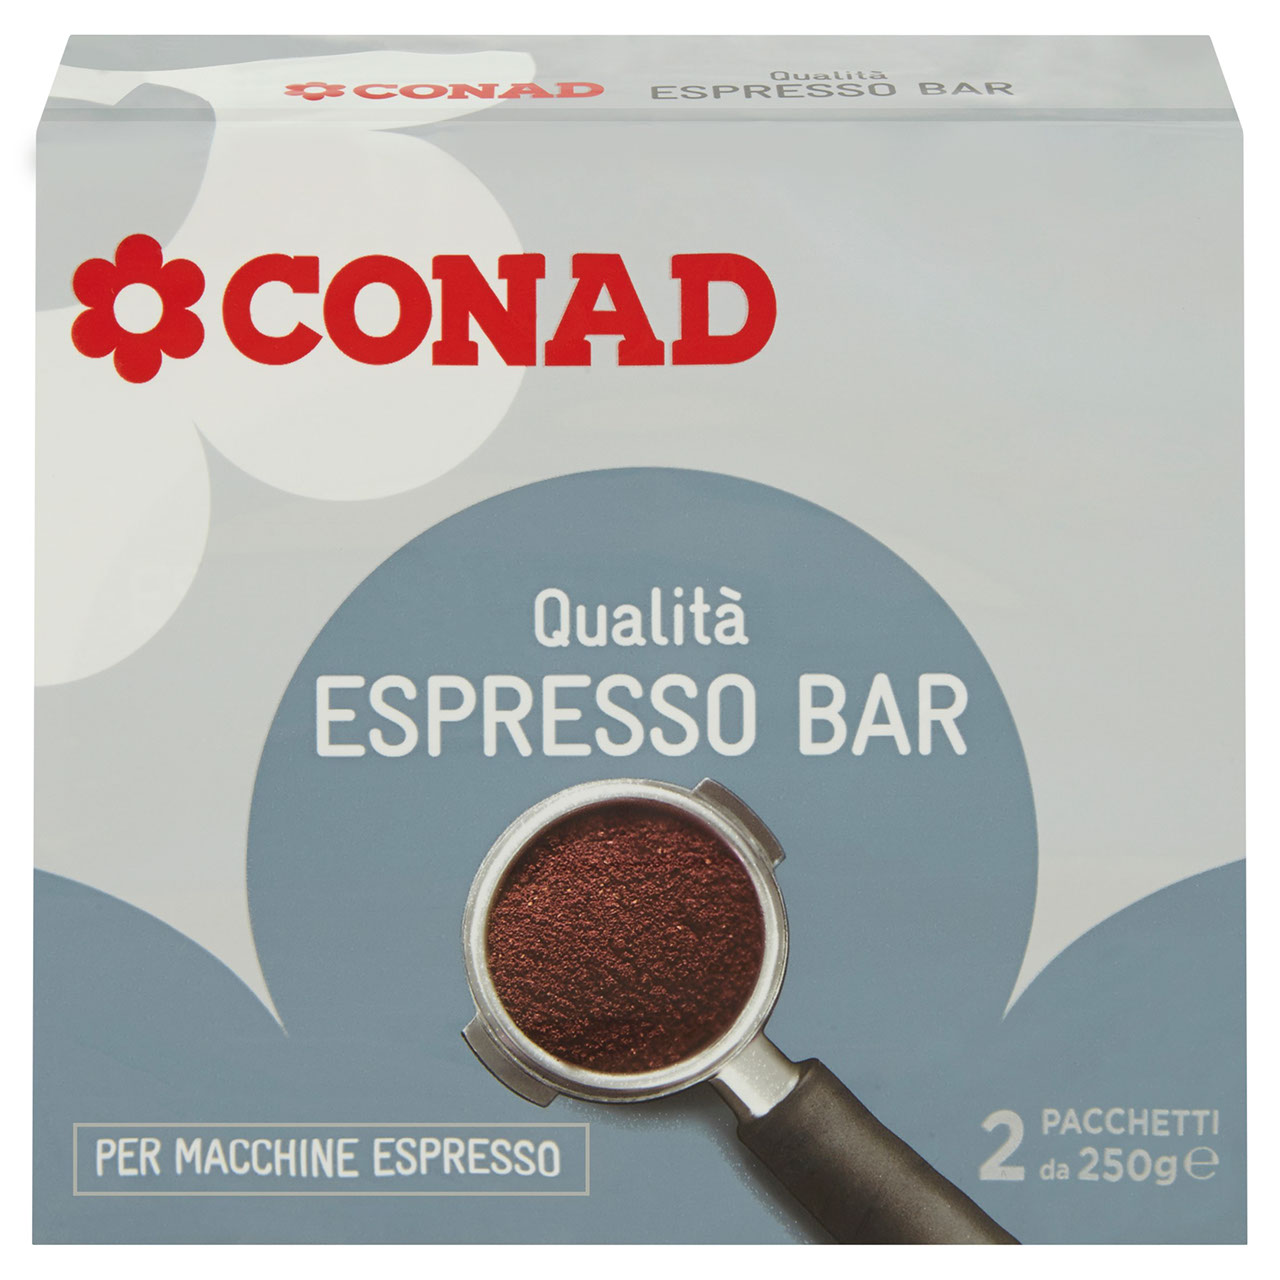 Qualità Espresso Bar 2 x 250 g Conad online